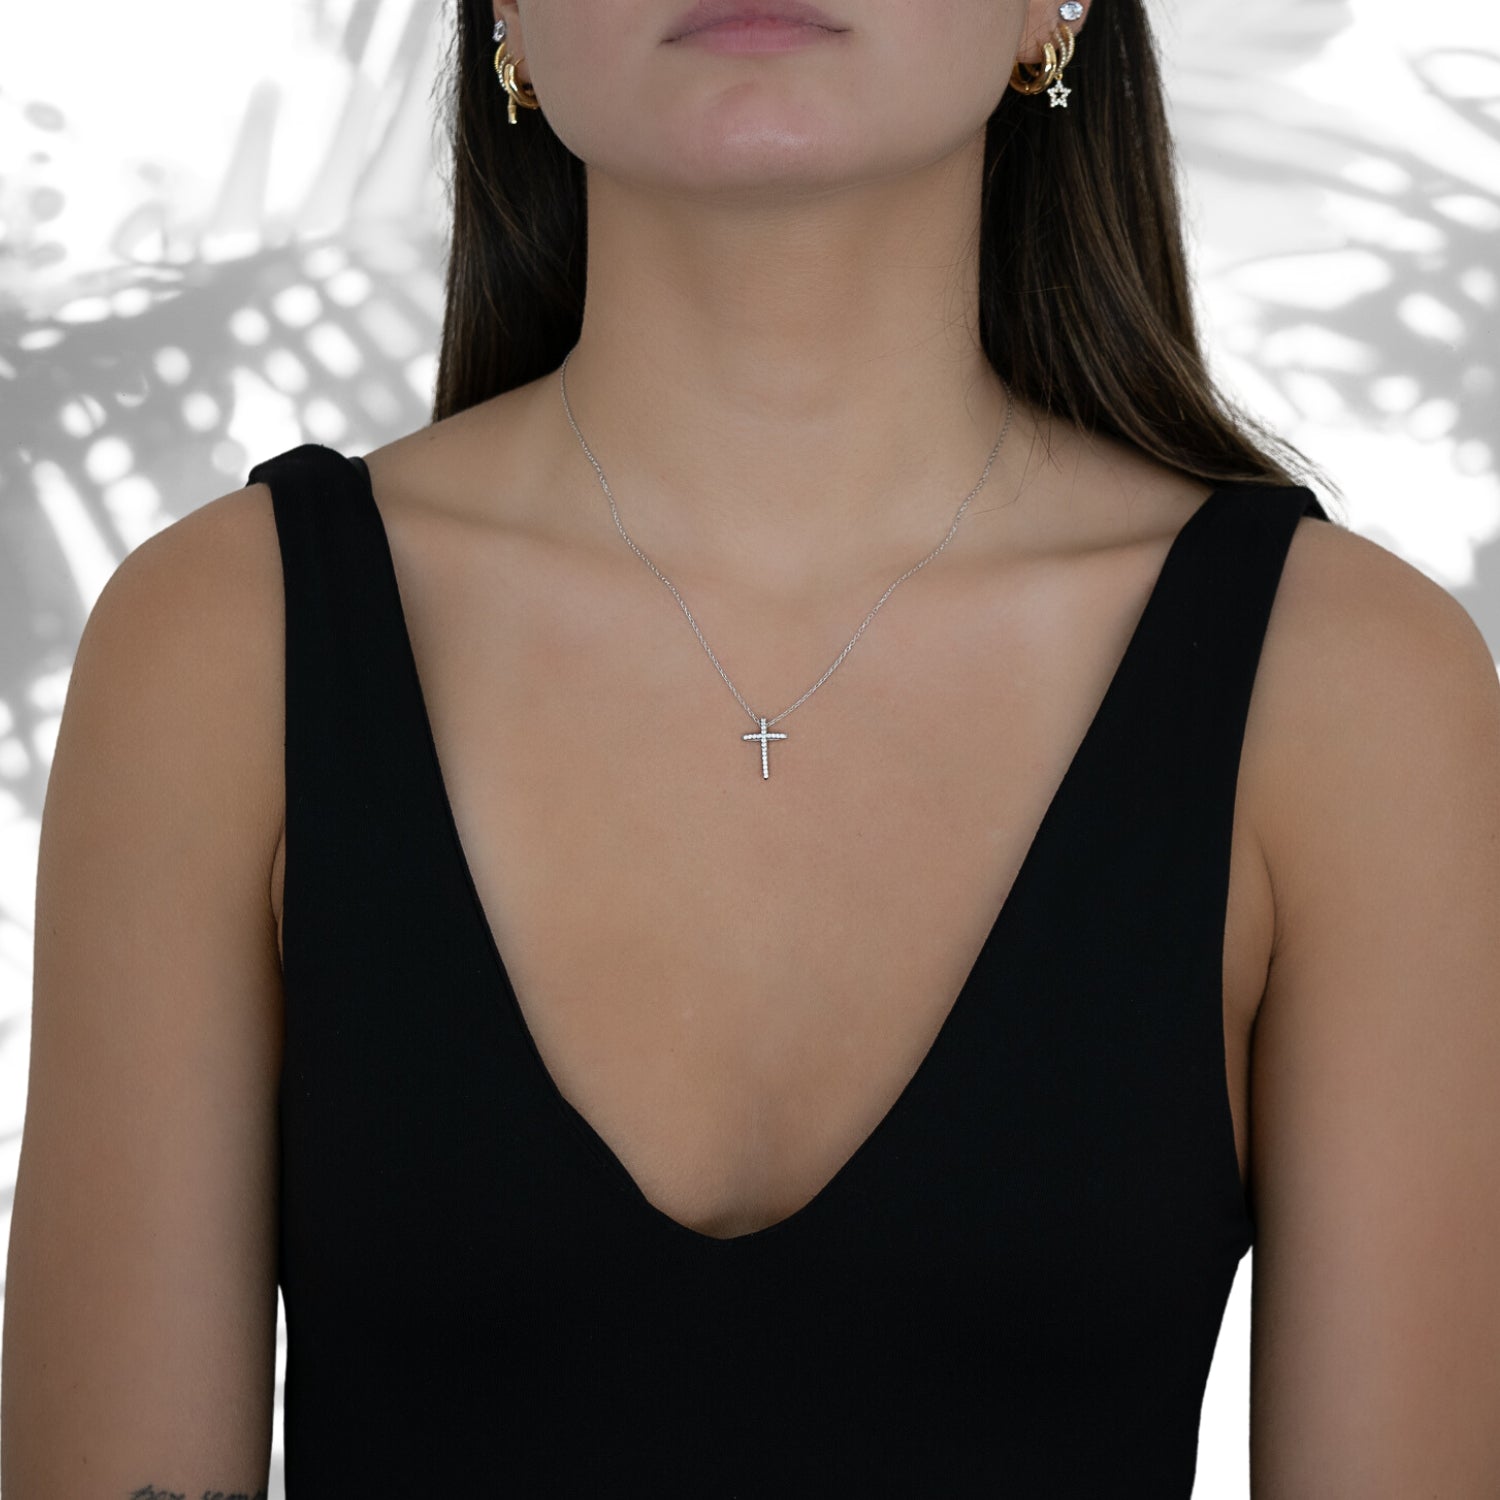 The Unique Cross Diamond Necklace beautifully adorning the model's neckline.